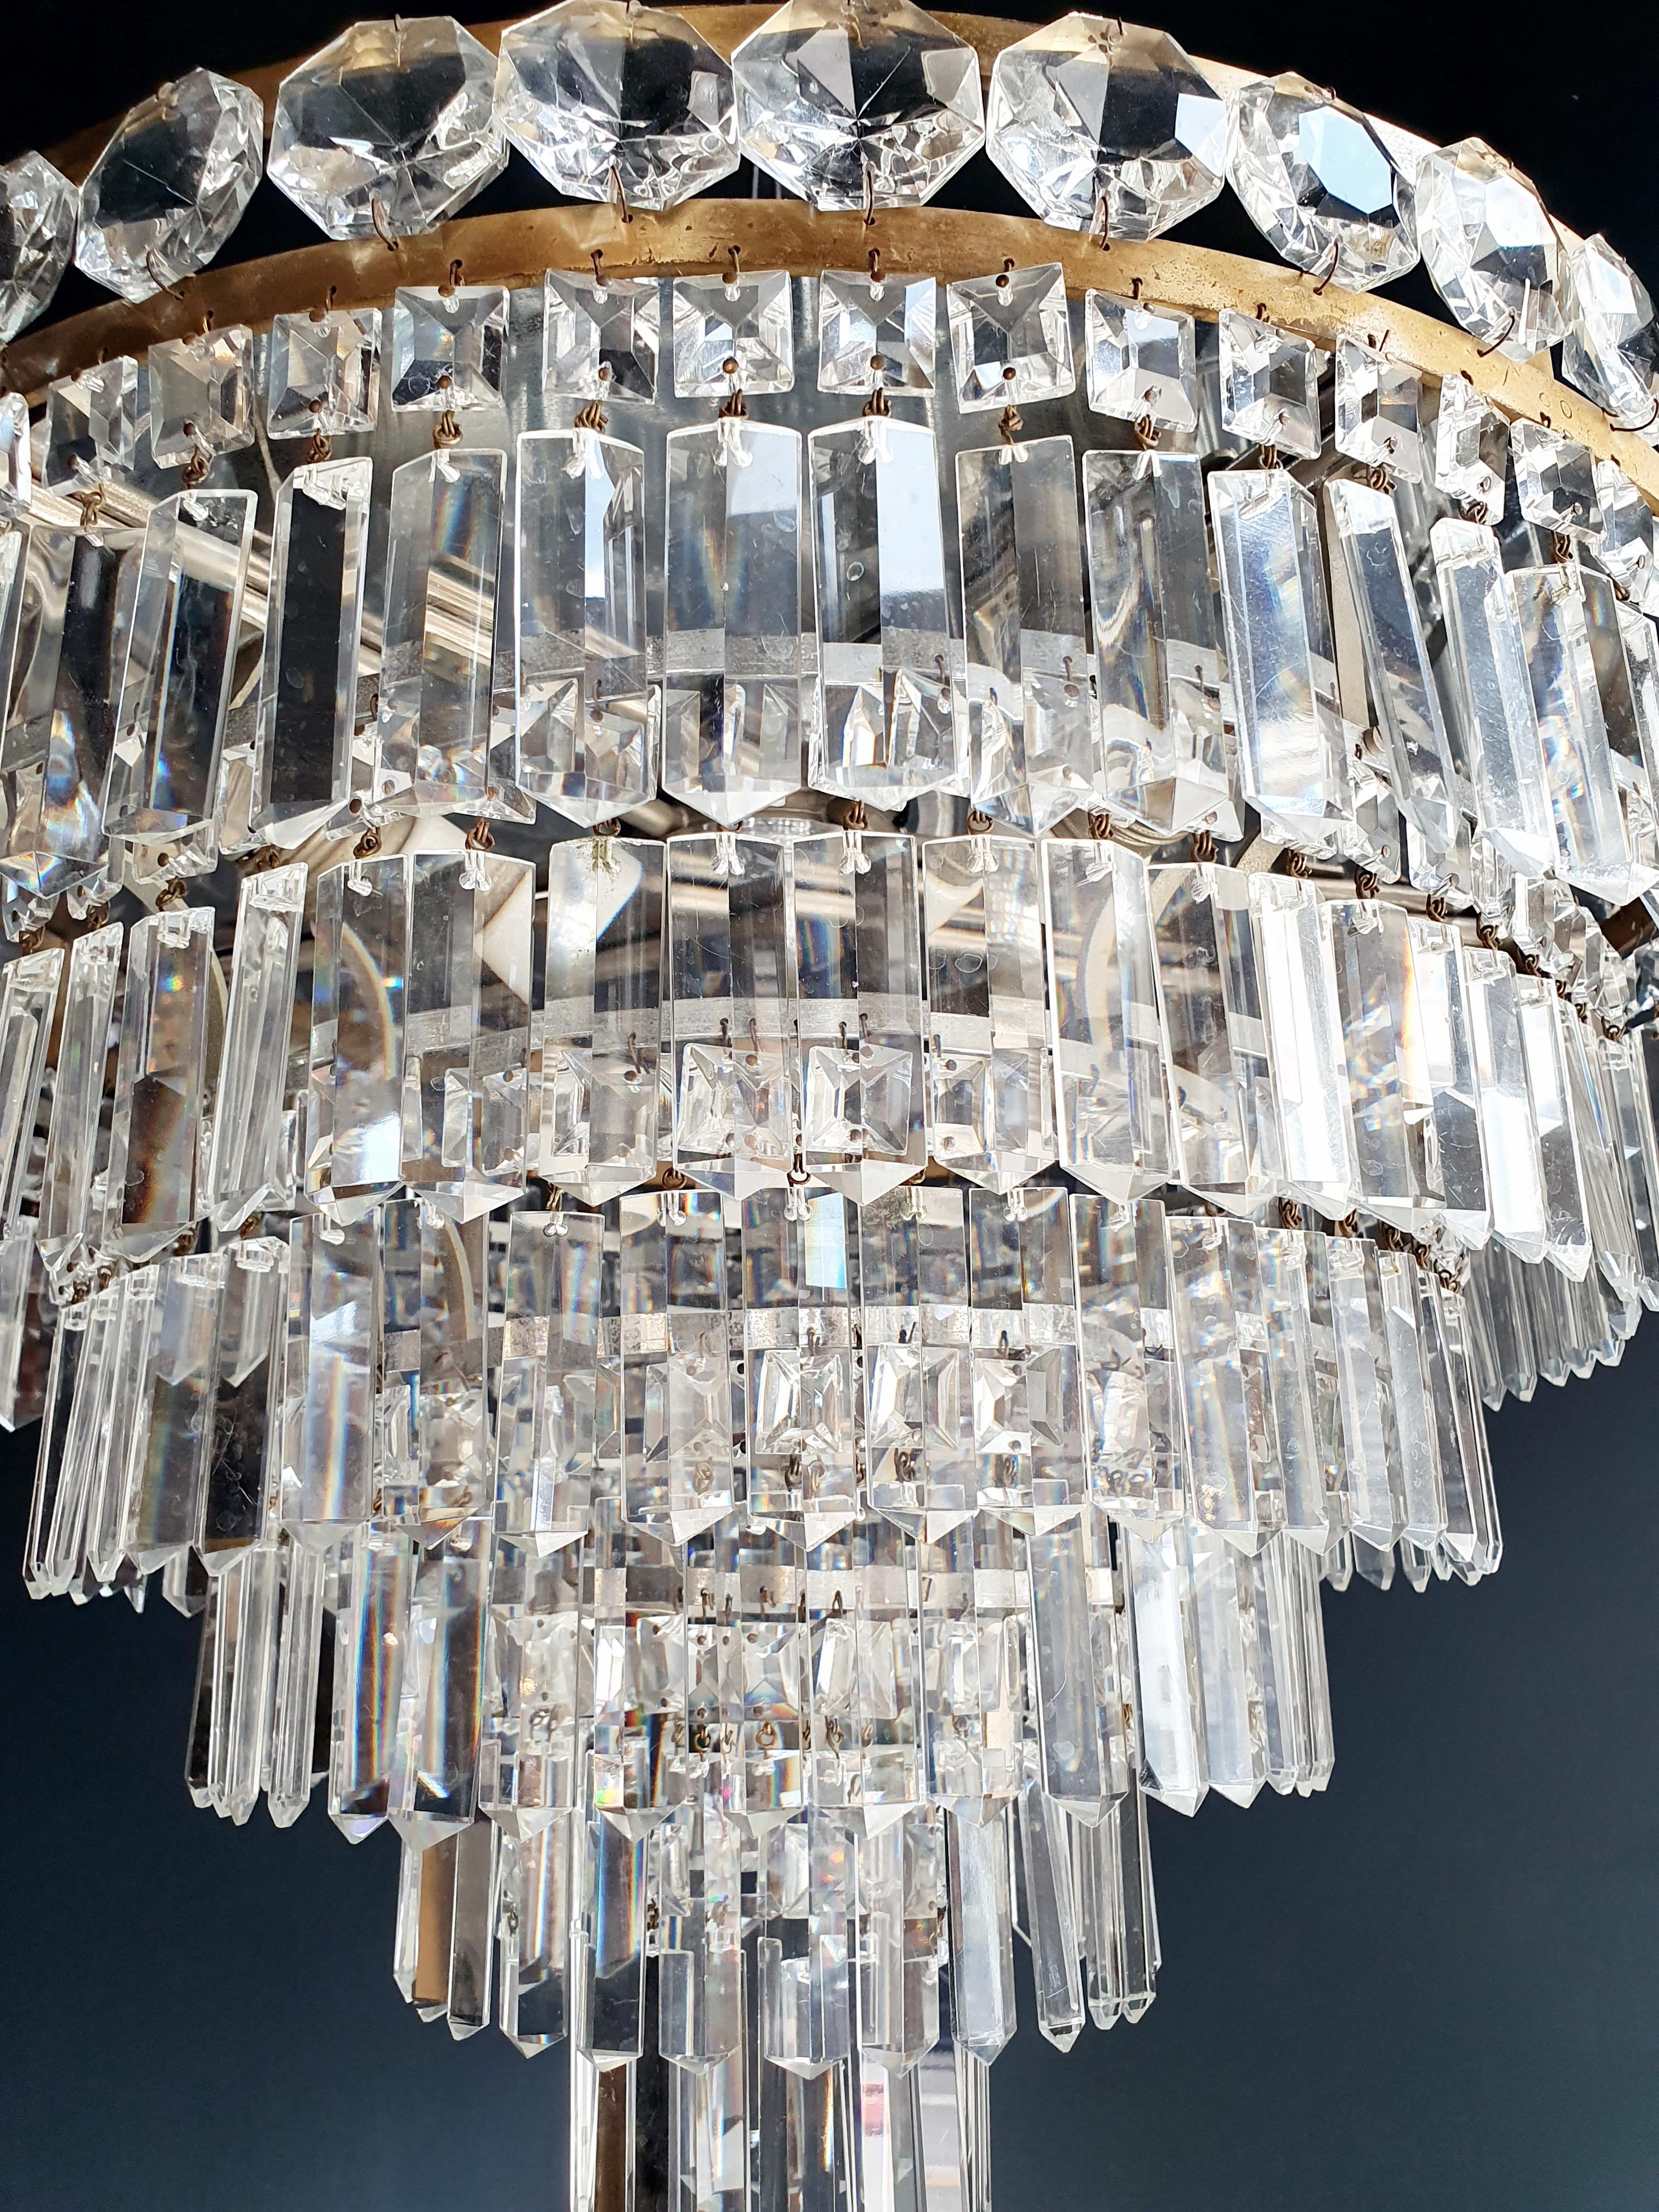 European Art Deco Low Plafonnier Brass Crystal Chandelier Lustre Ceiling Lamp Antique